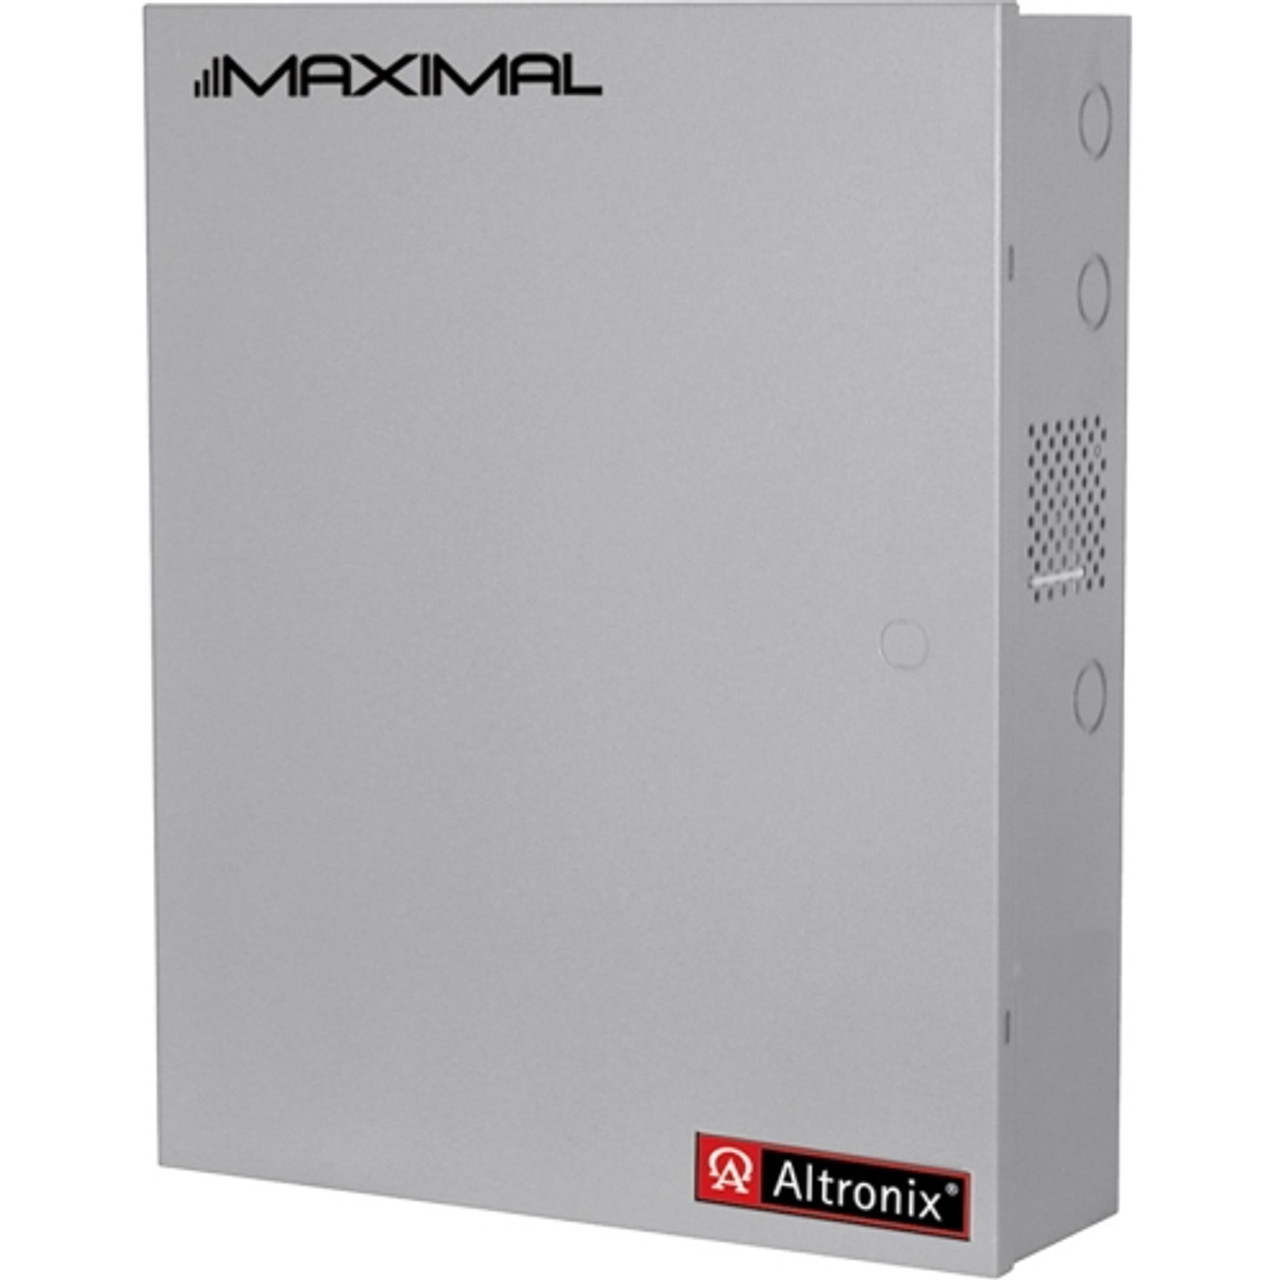 MAXIMAL13EV Altronix 24VDC 220V Power Supply/Changer